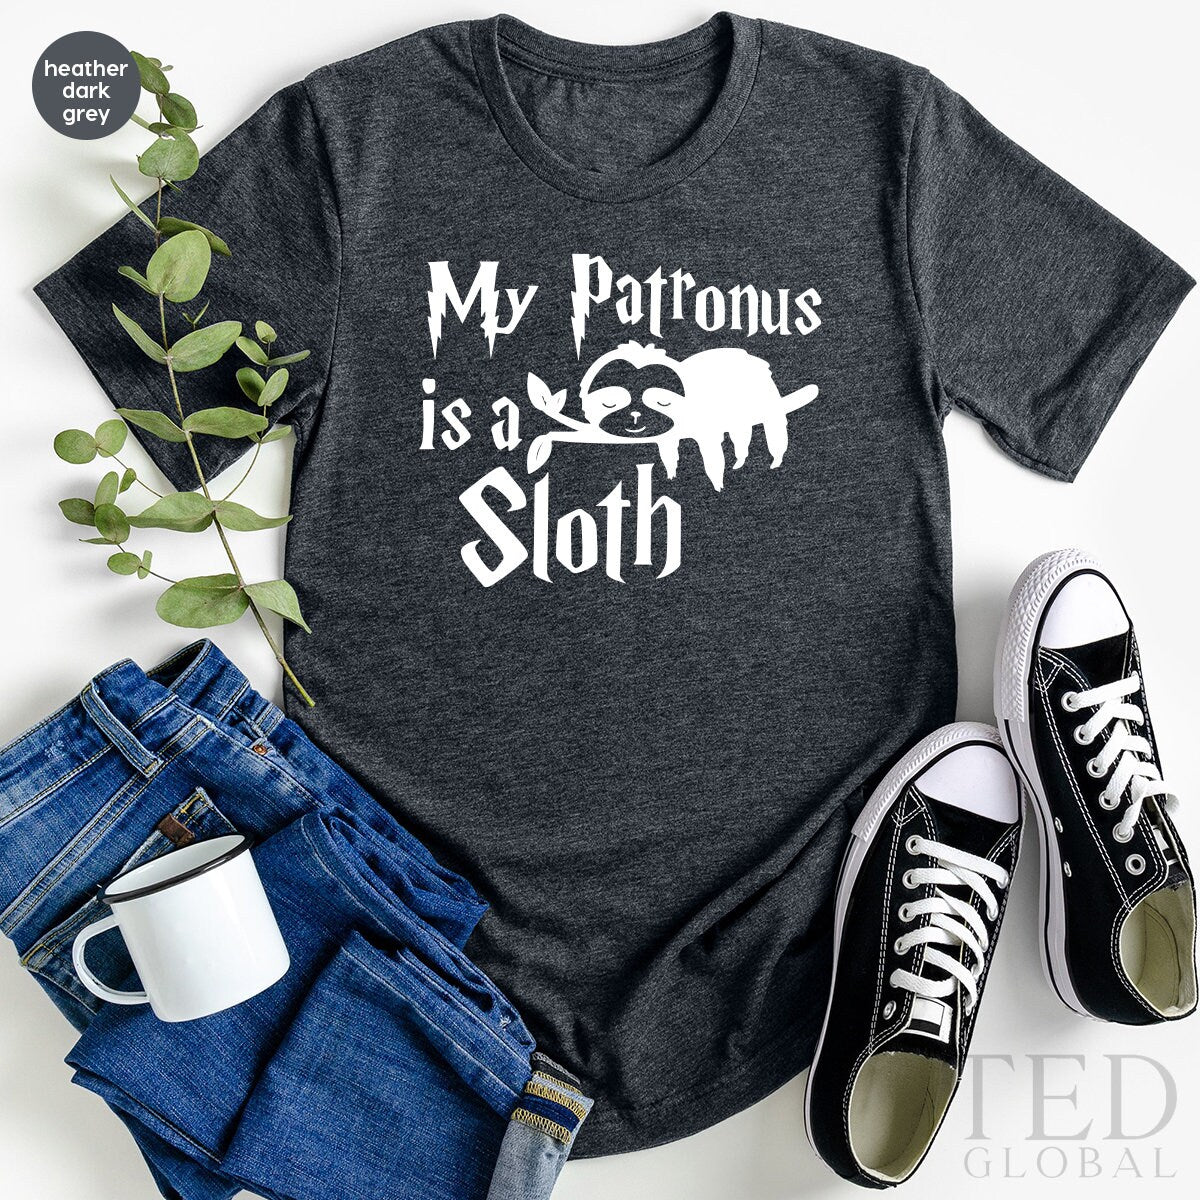 Funny Sloth Tshirt, Sloth Lover Shirt, Potter Sloth Shirt, My Patronus Is Sloth Shirt, Lazy Days T Shirt, Funny Animal Tees, Humorous Shirt - Fastdeliverytees.com